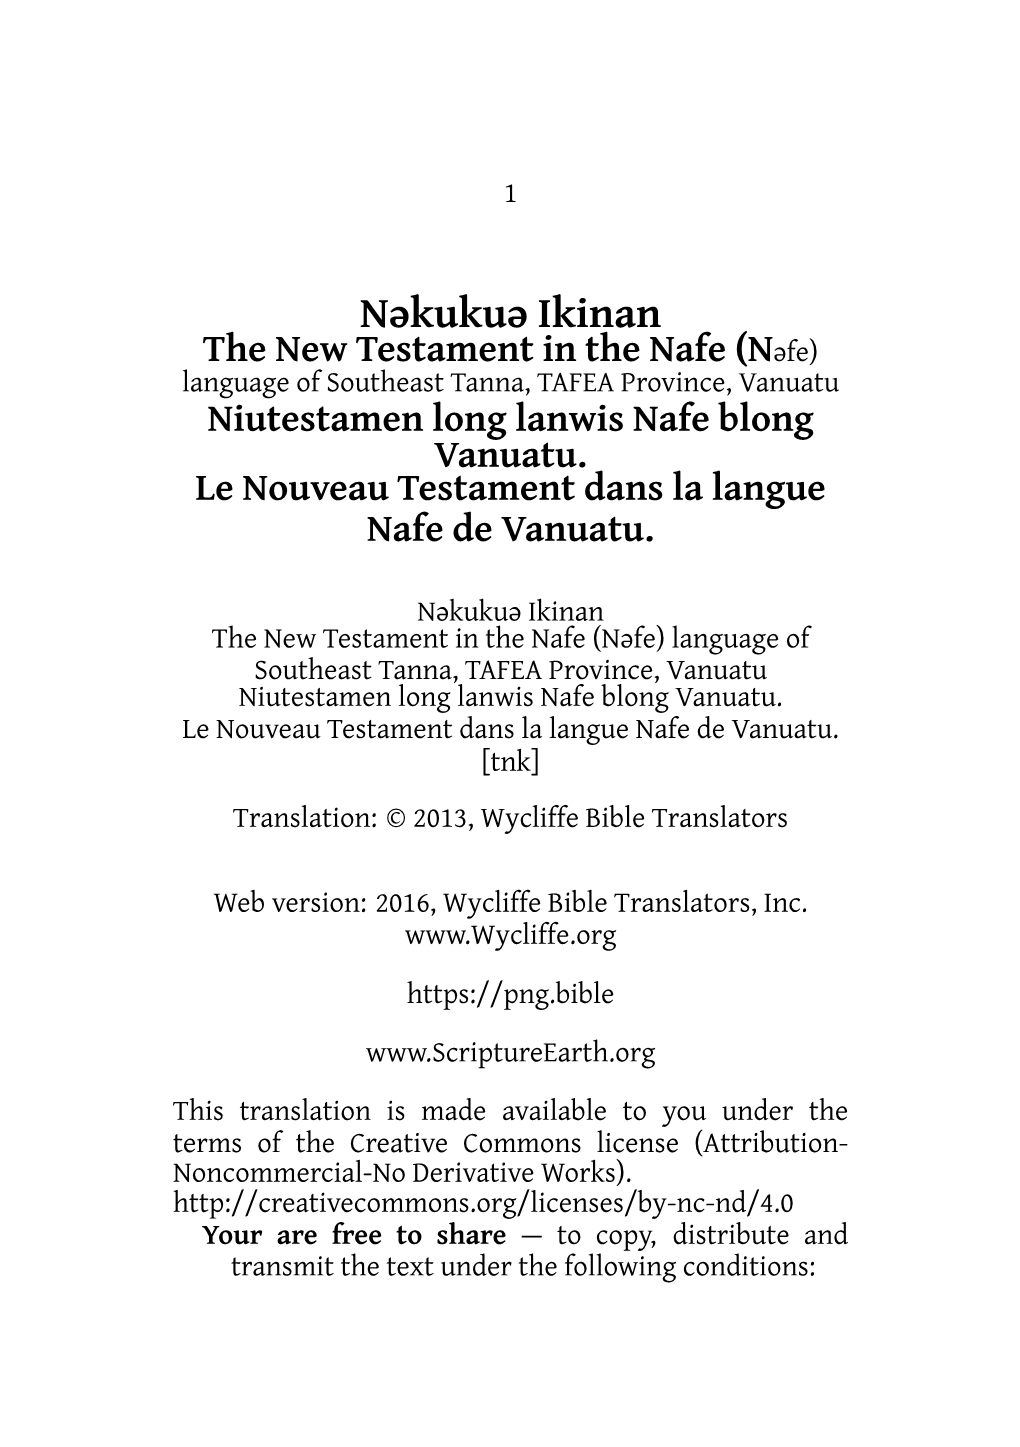 Nǝkukuǝ Ikinan the New Testament in the Nafe (Nəfe) Language of Southeast Tanna, TAFEA Province, Vanuatu Niutestamen Long Lanwis Nafe Blong Vanuatu